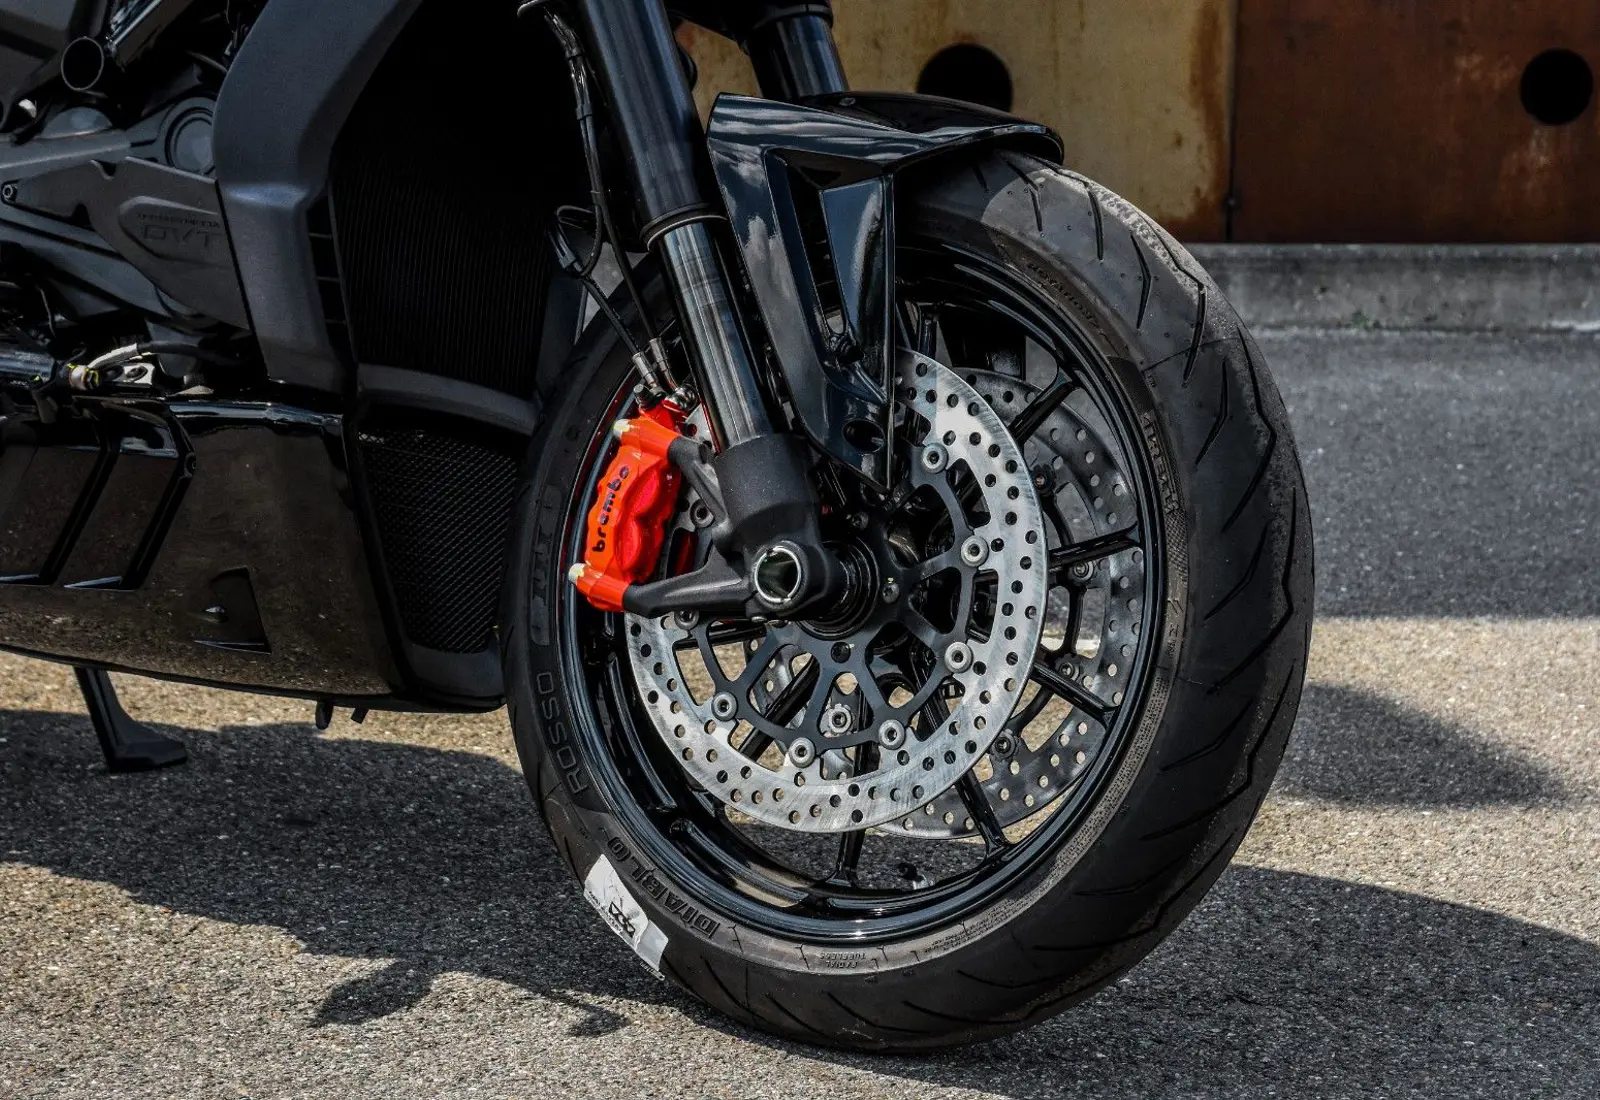 Ducati X-Diavel Nera * POLTRONA FRAU * 1 OF 500 * LIMITED ED - 44487